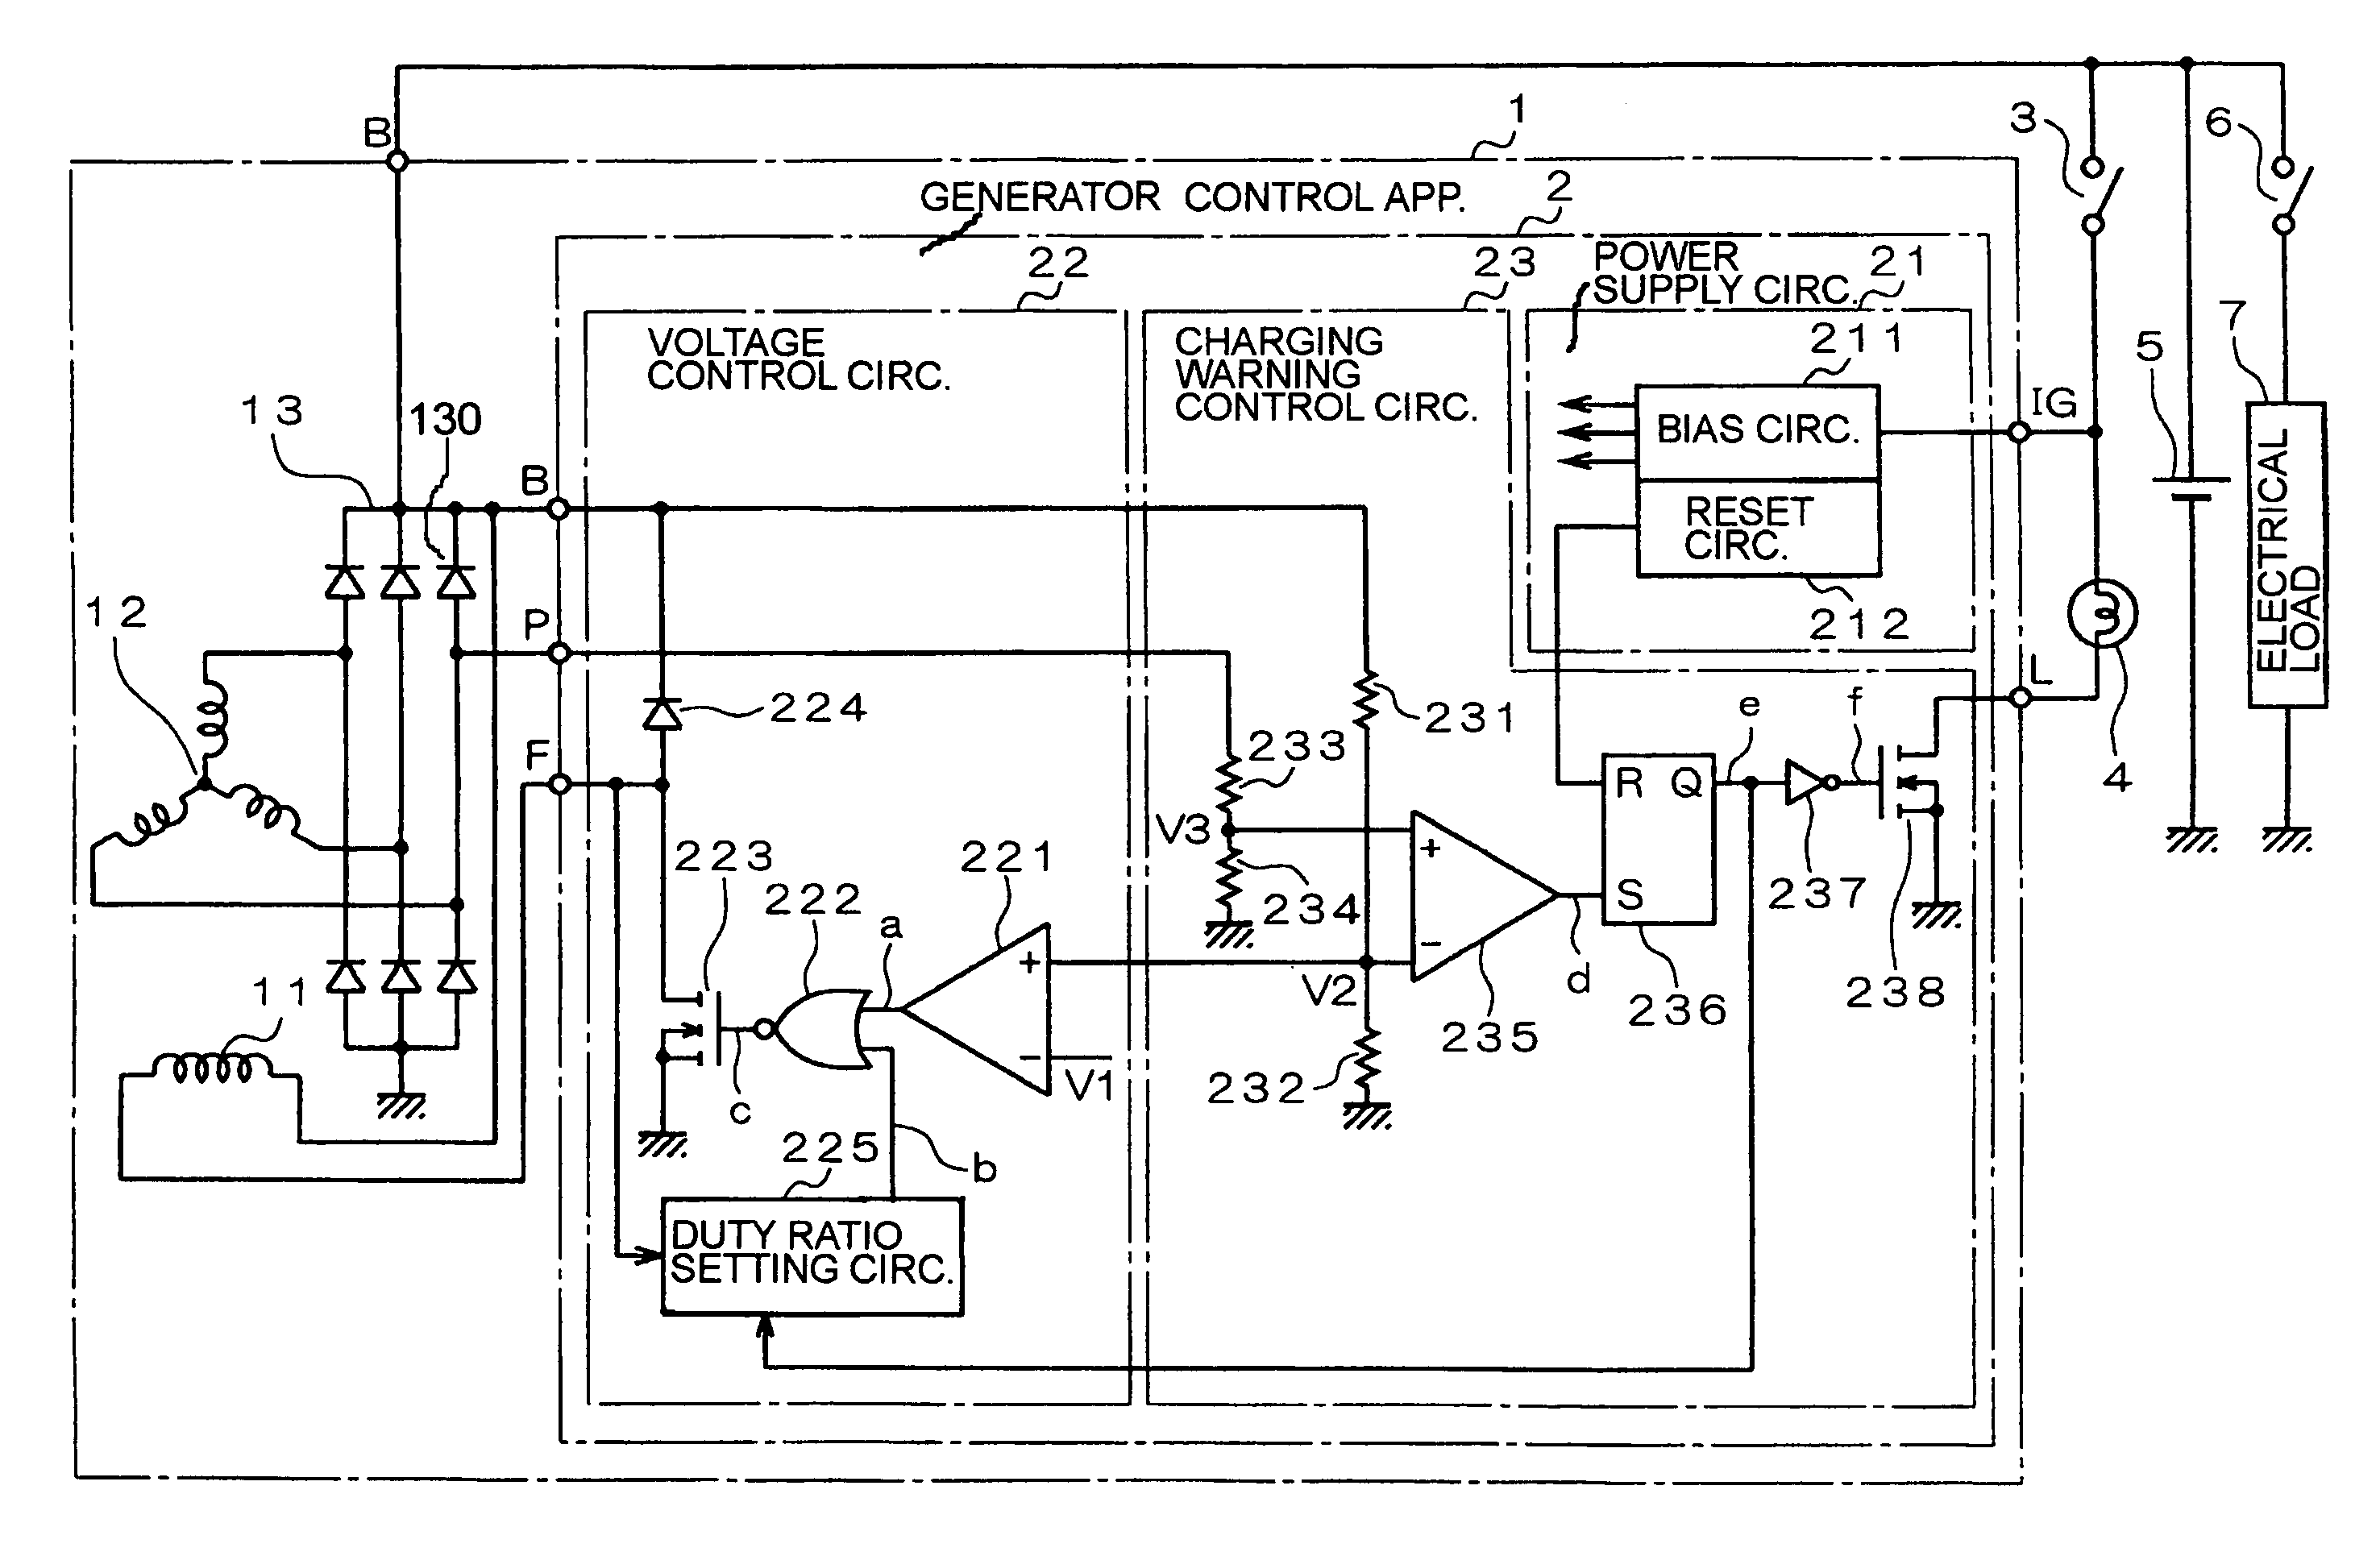 Vehicle AC generator apparatus having improved generator control apparatus